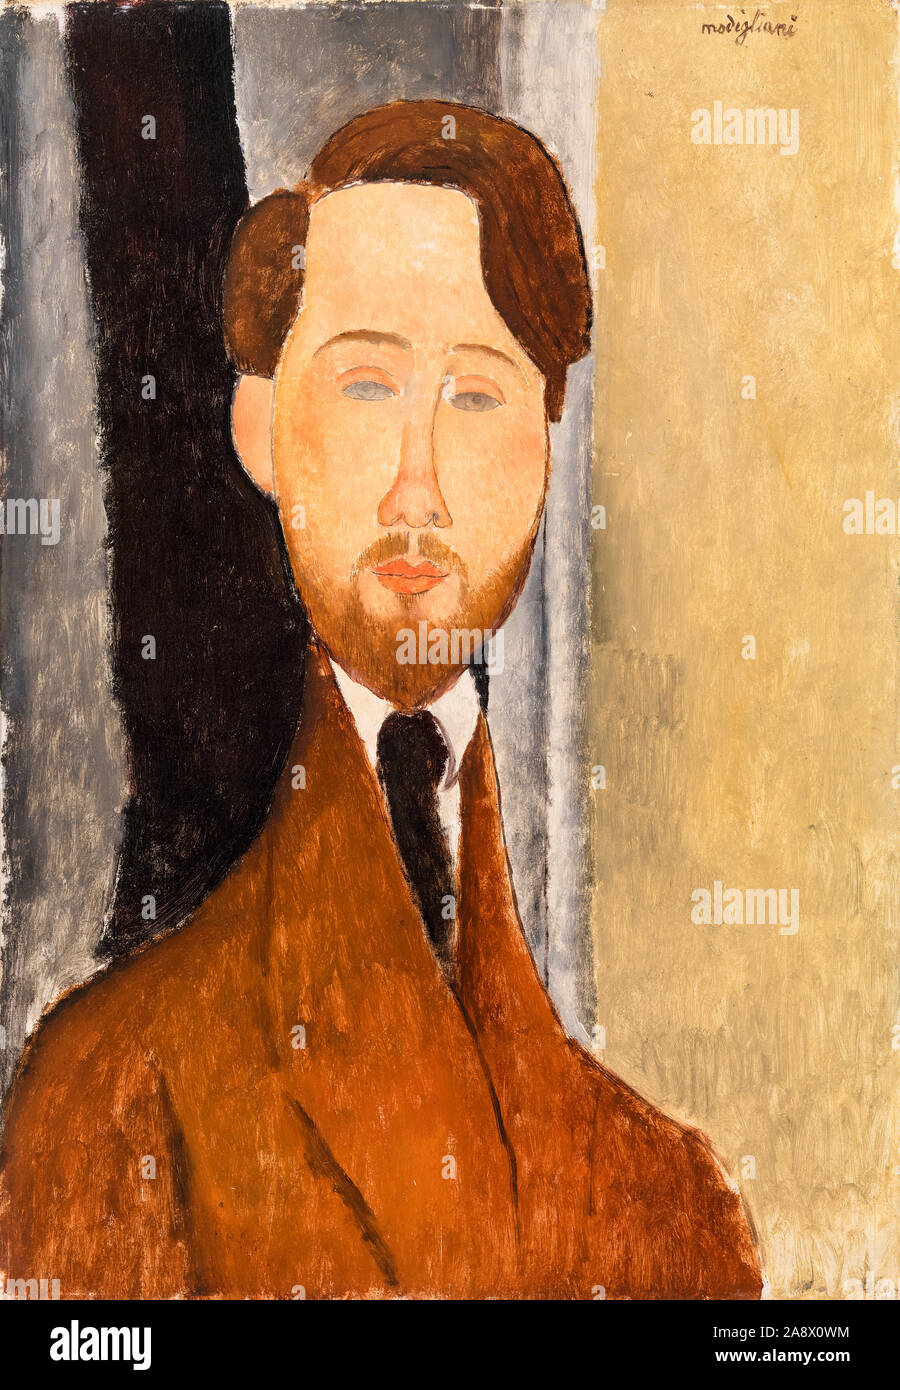 Amedeo Modigliani, Léopold Zborowksi, portrait painting, 1919 Stock Photo